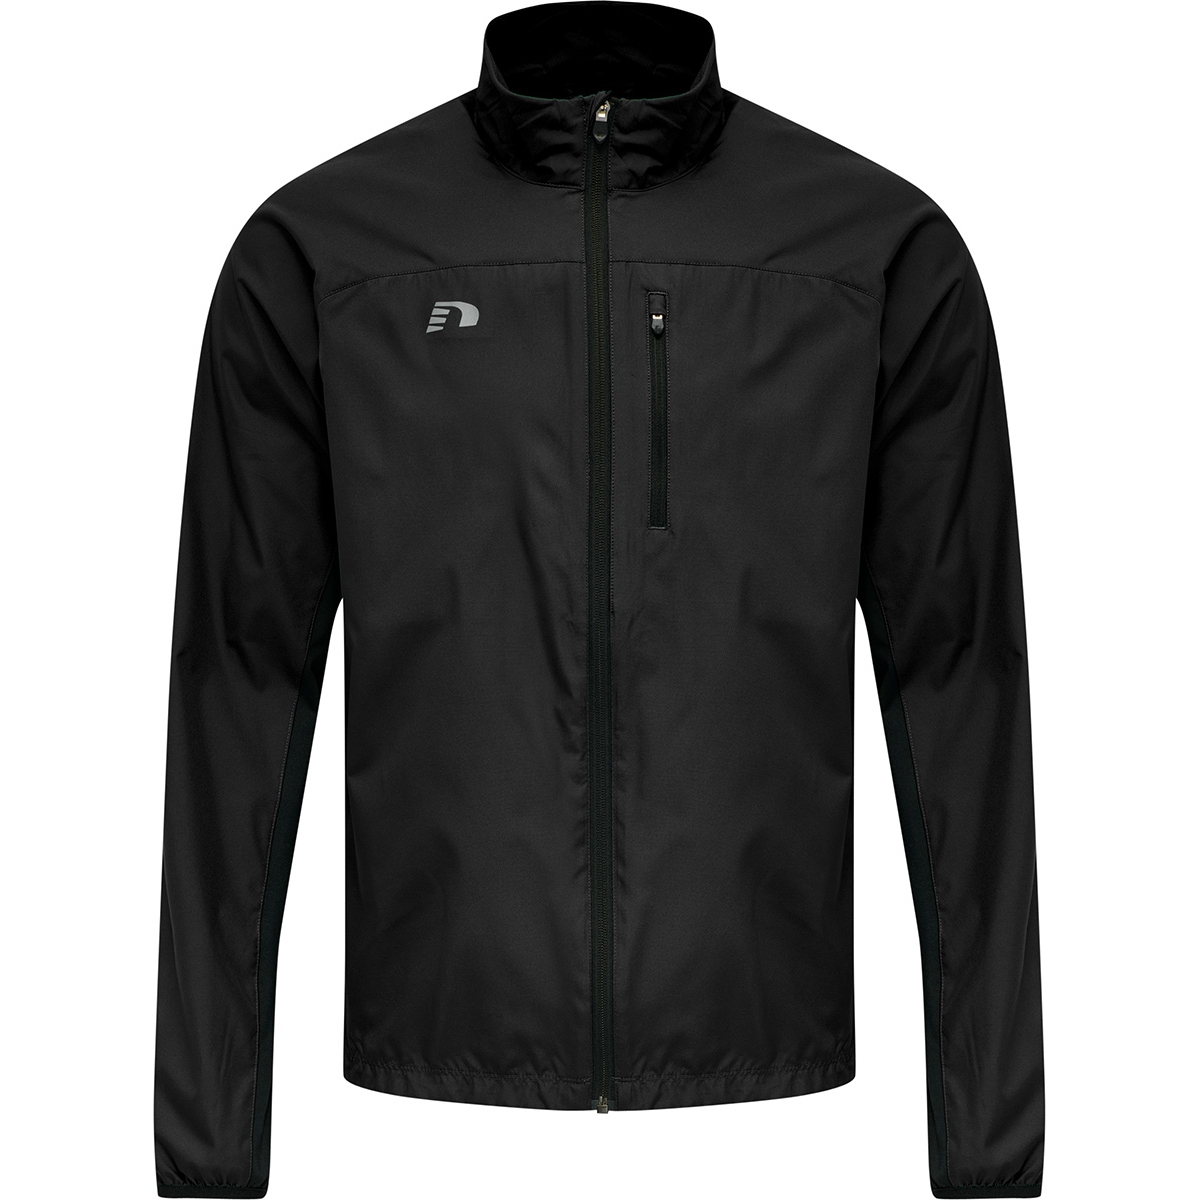 Productfoto van Newline Core Jacket - black